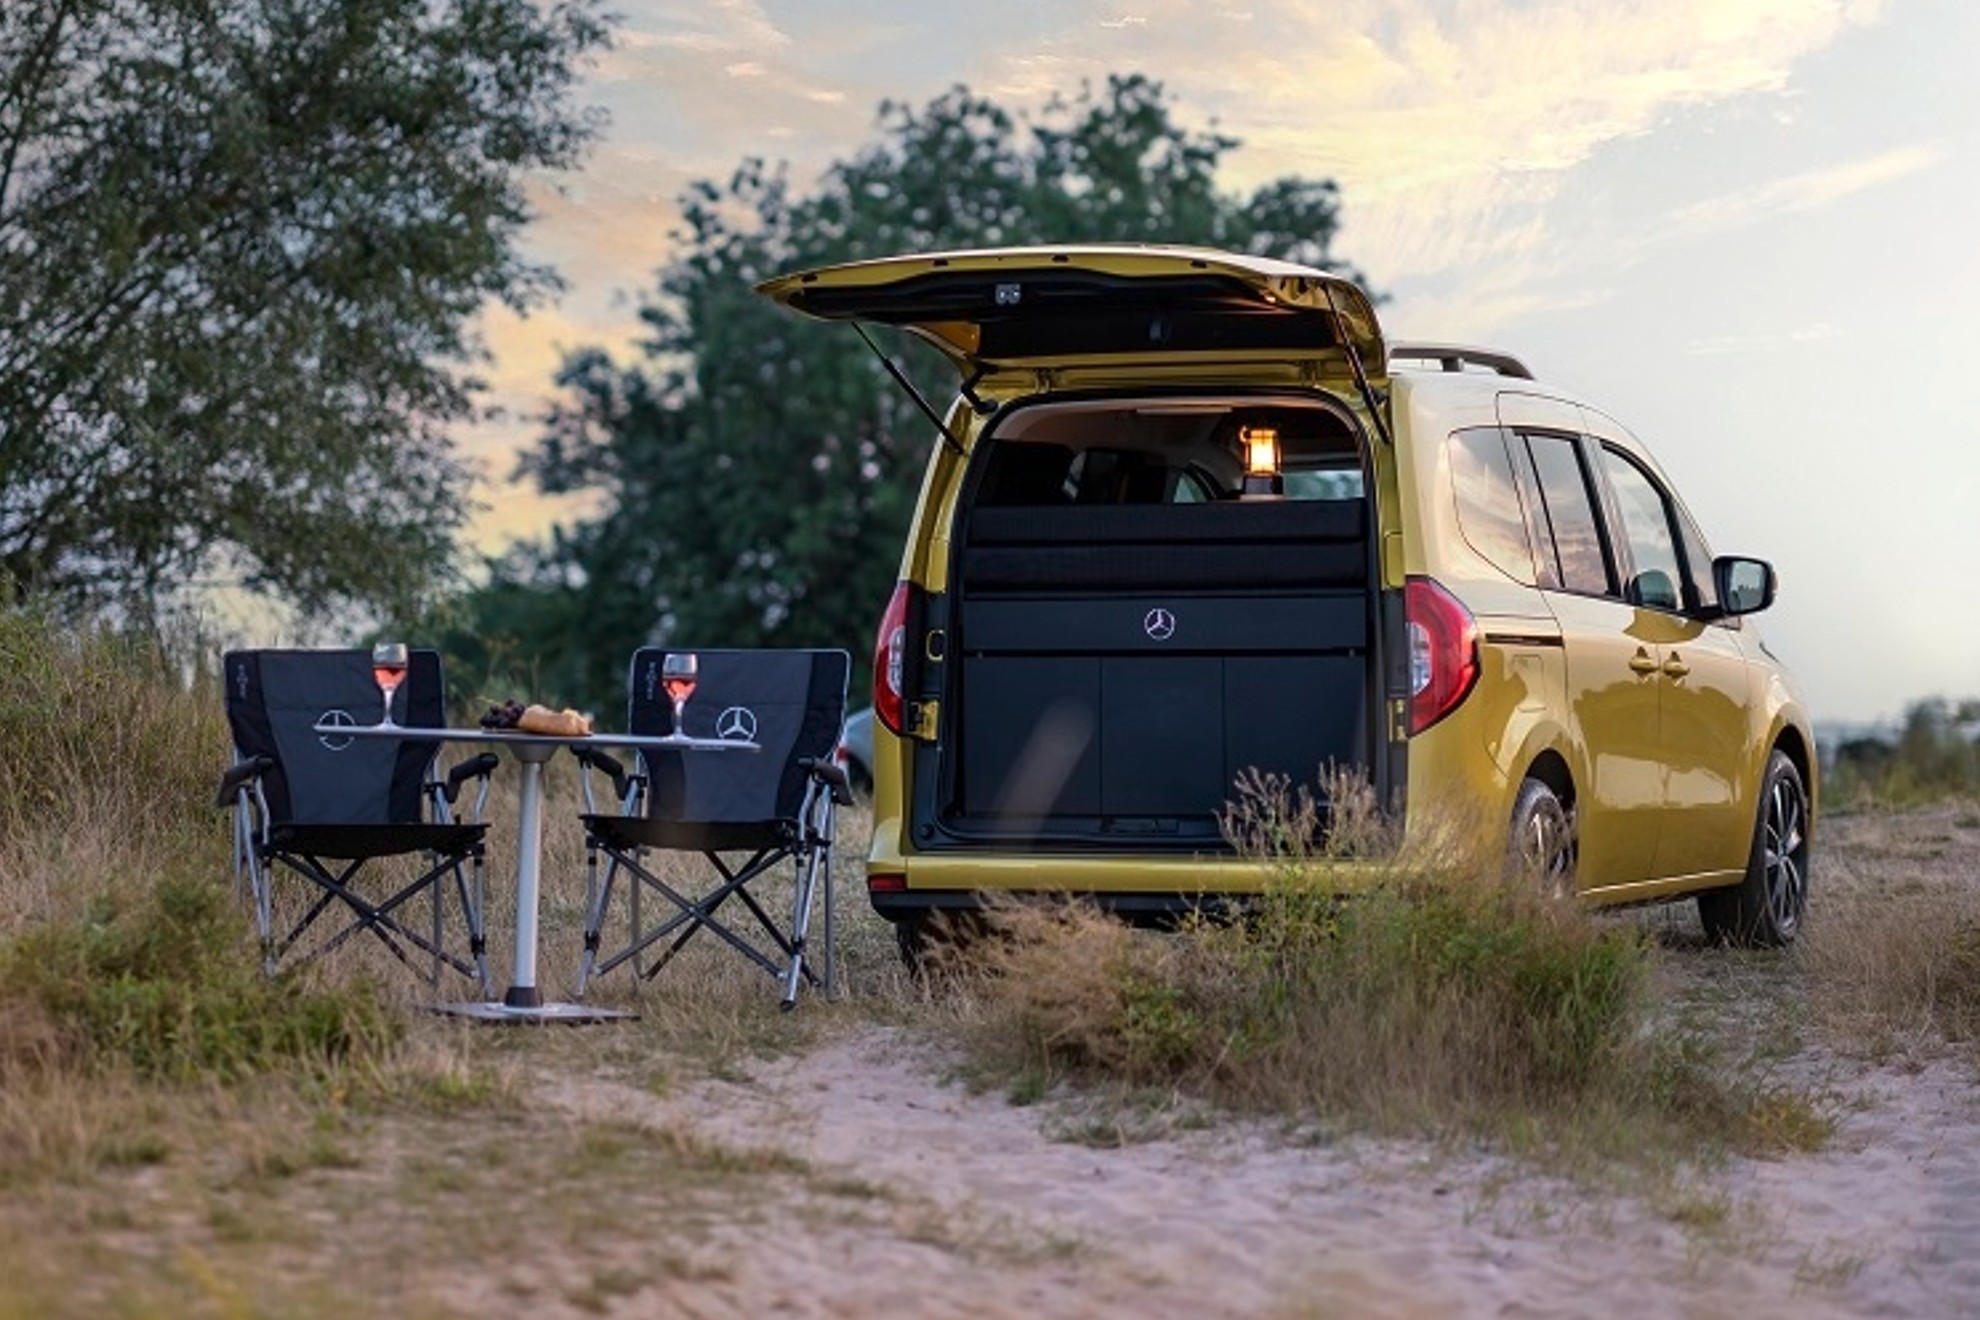 Mercedes Clase T - Modulo Marco Polo - camper - furgoneta - camping - motorhome